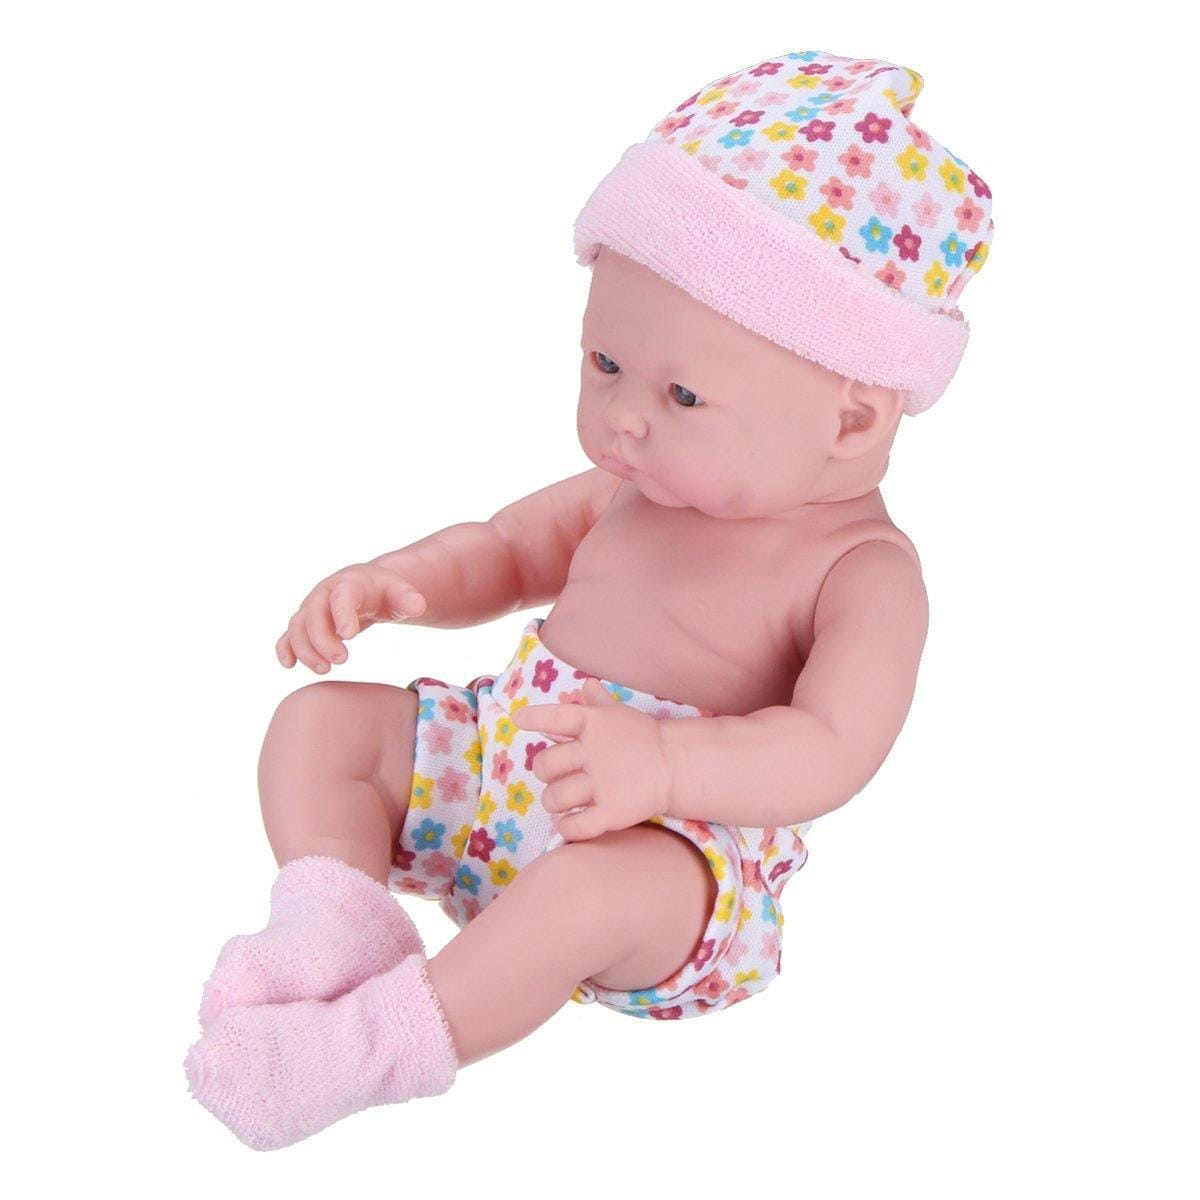 ezy2find dolls Pink Newborn Baby Dolls Gift Toys Soft Vinyl Silicone Lifelike Newborn Kids Toddler Girl